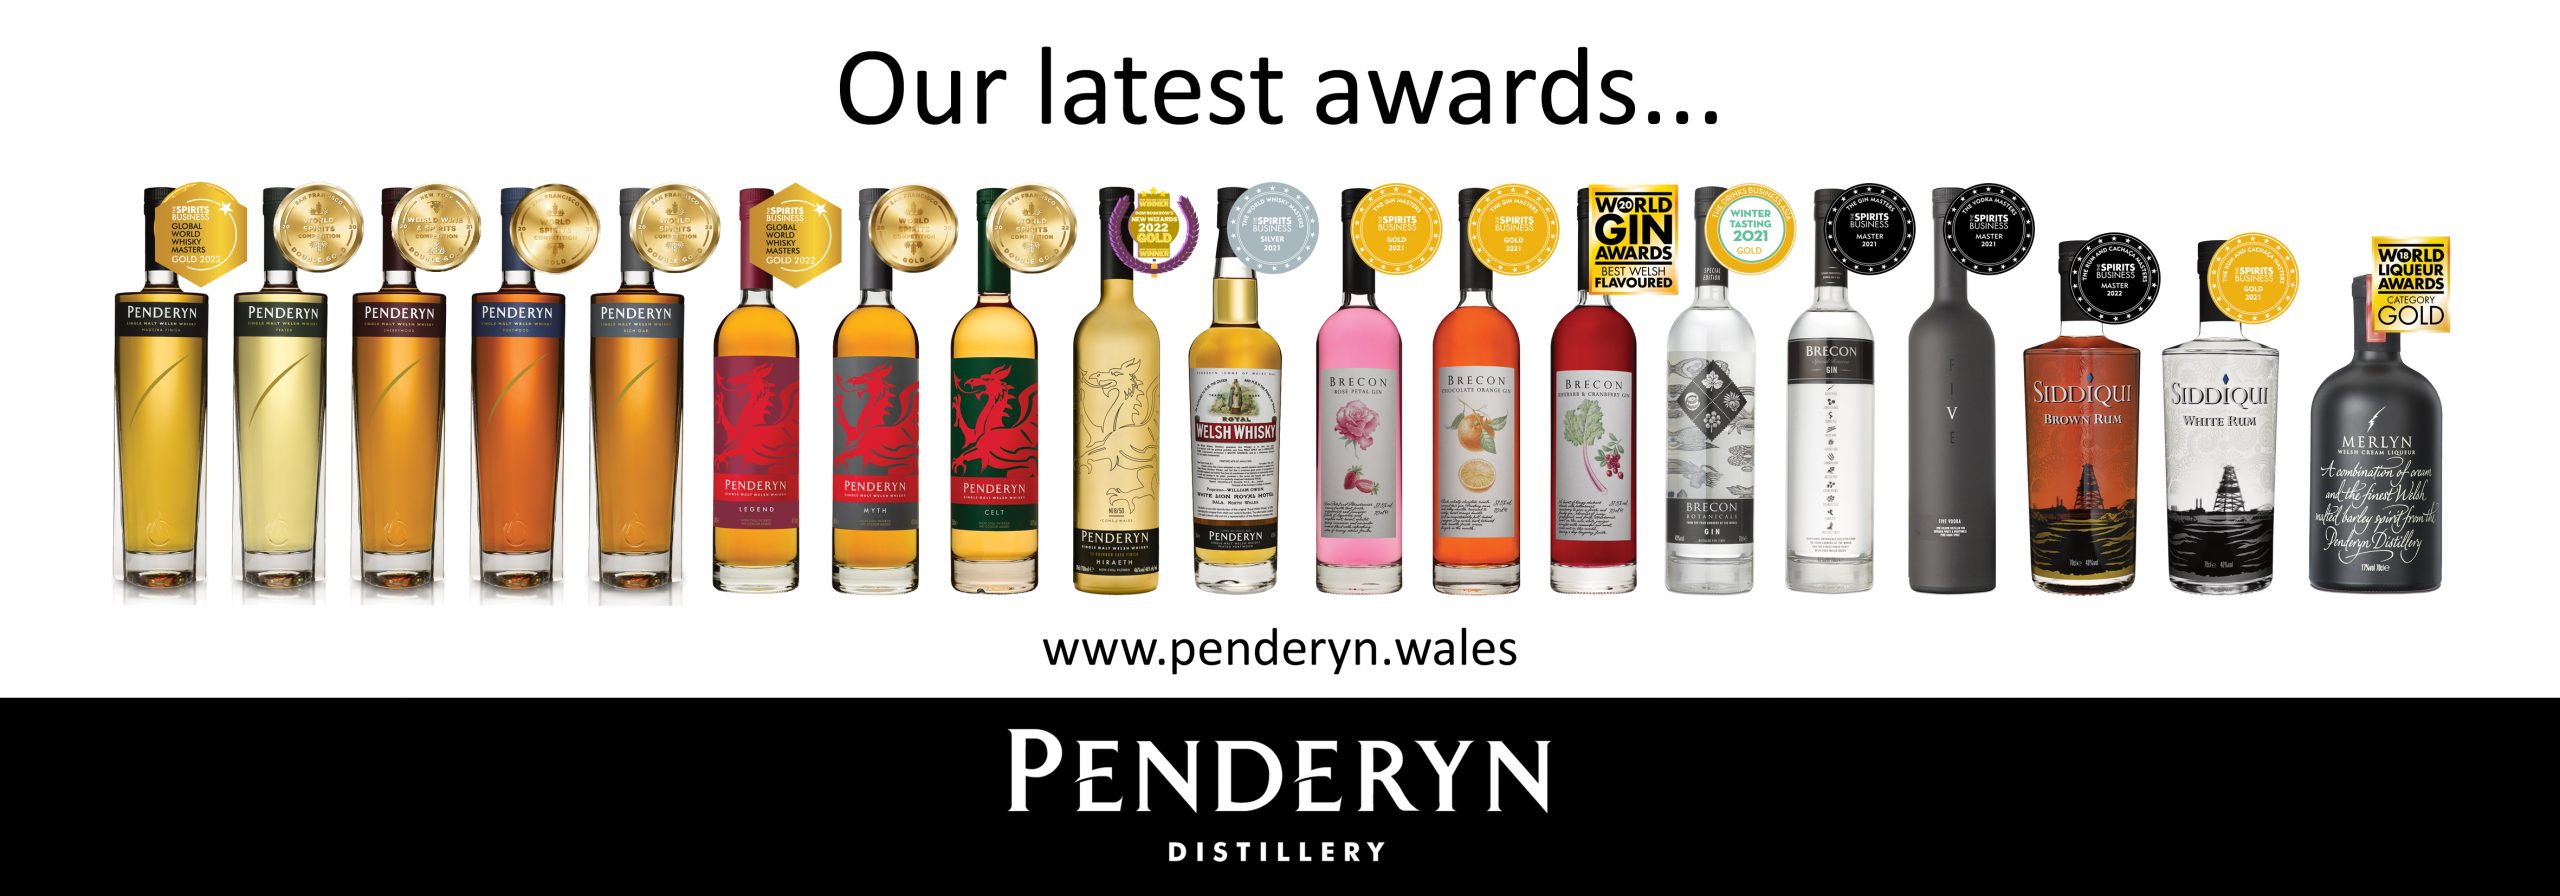 Penderyn Latest Awards